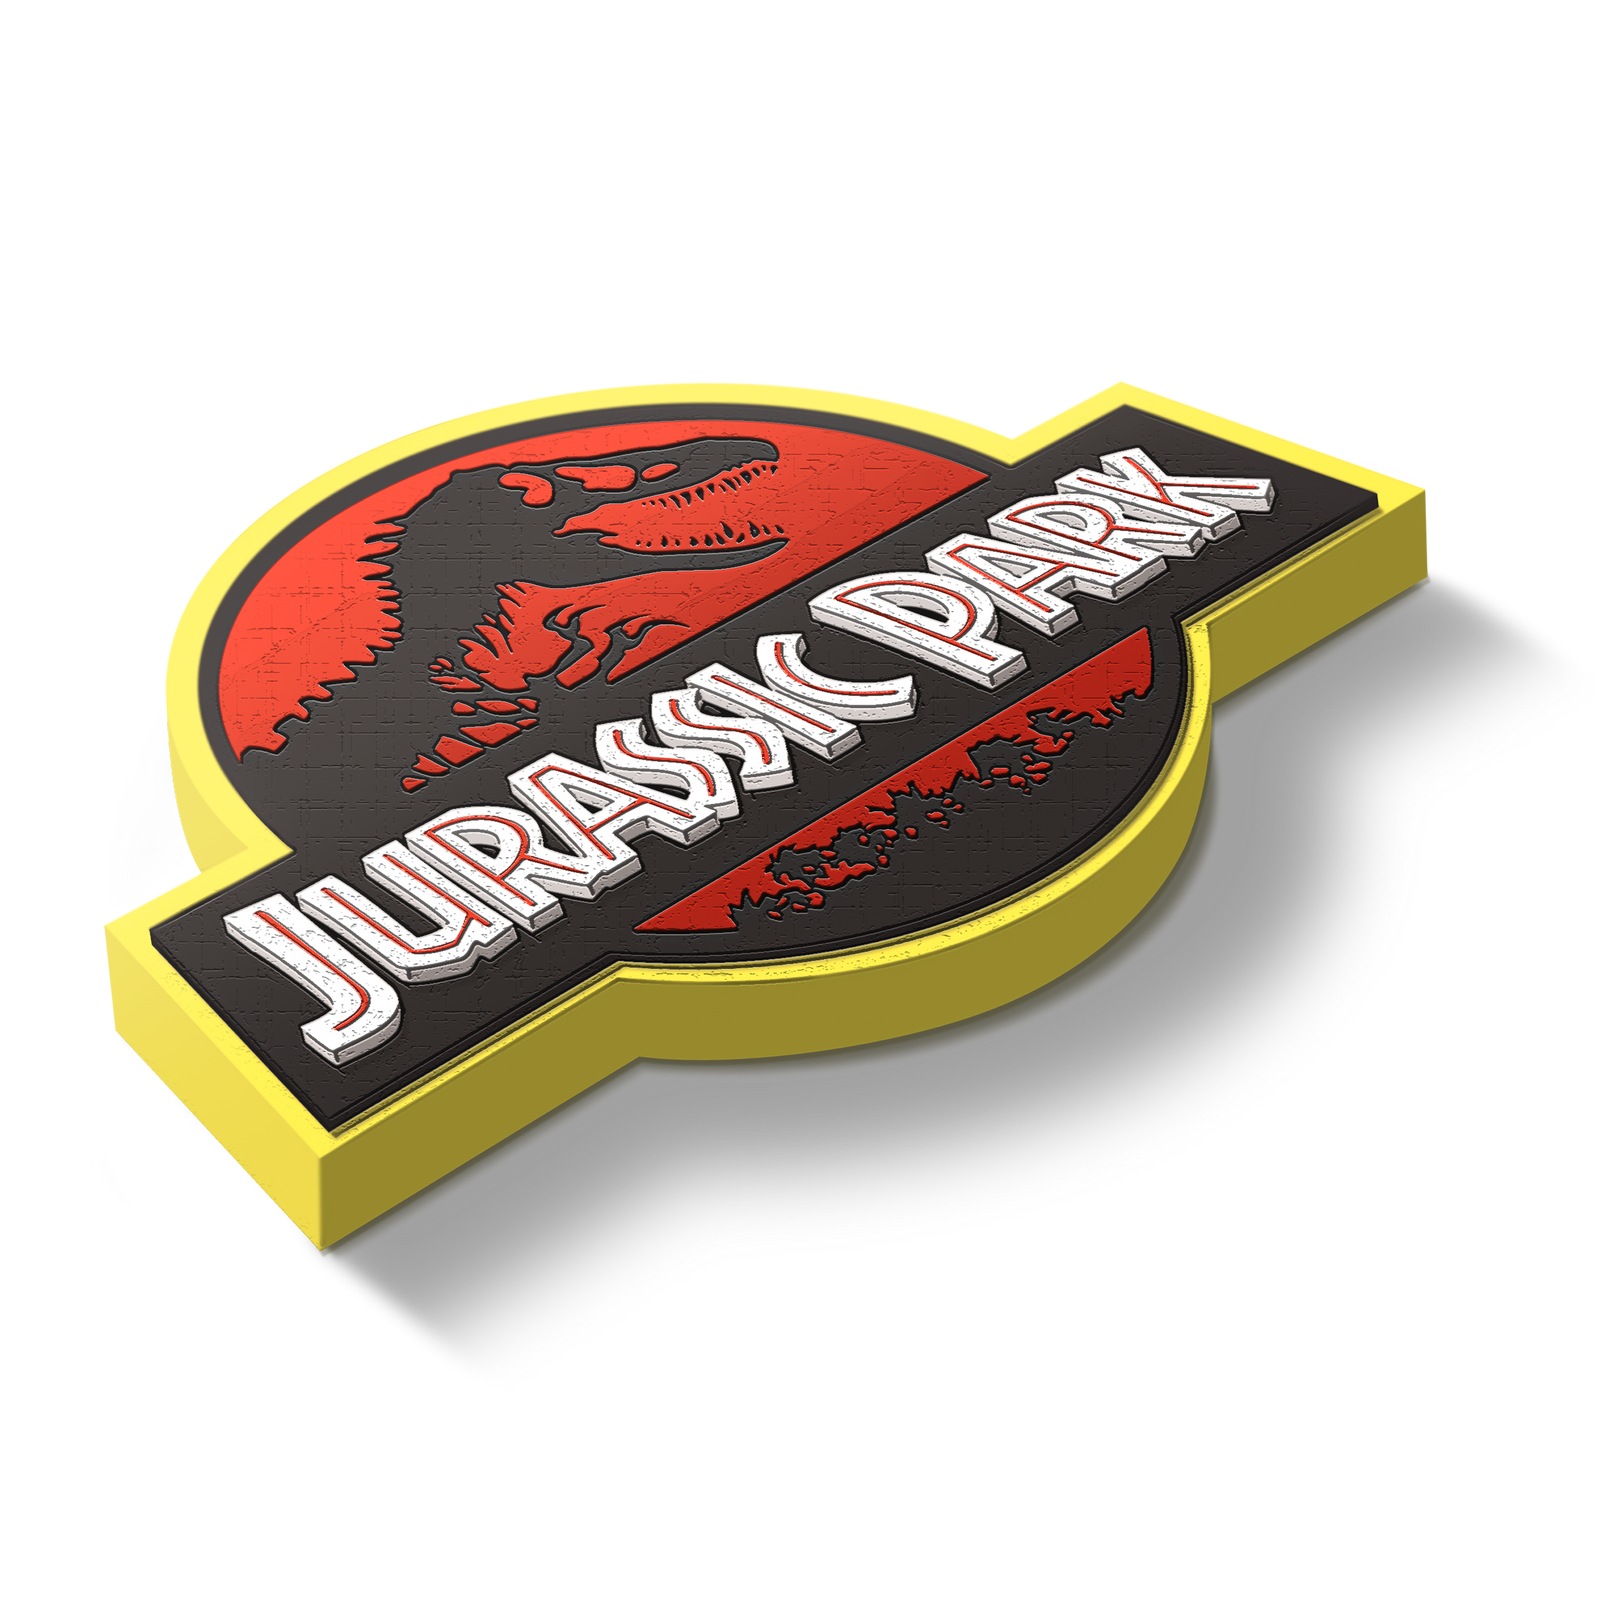 Jurassic Park logo.